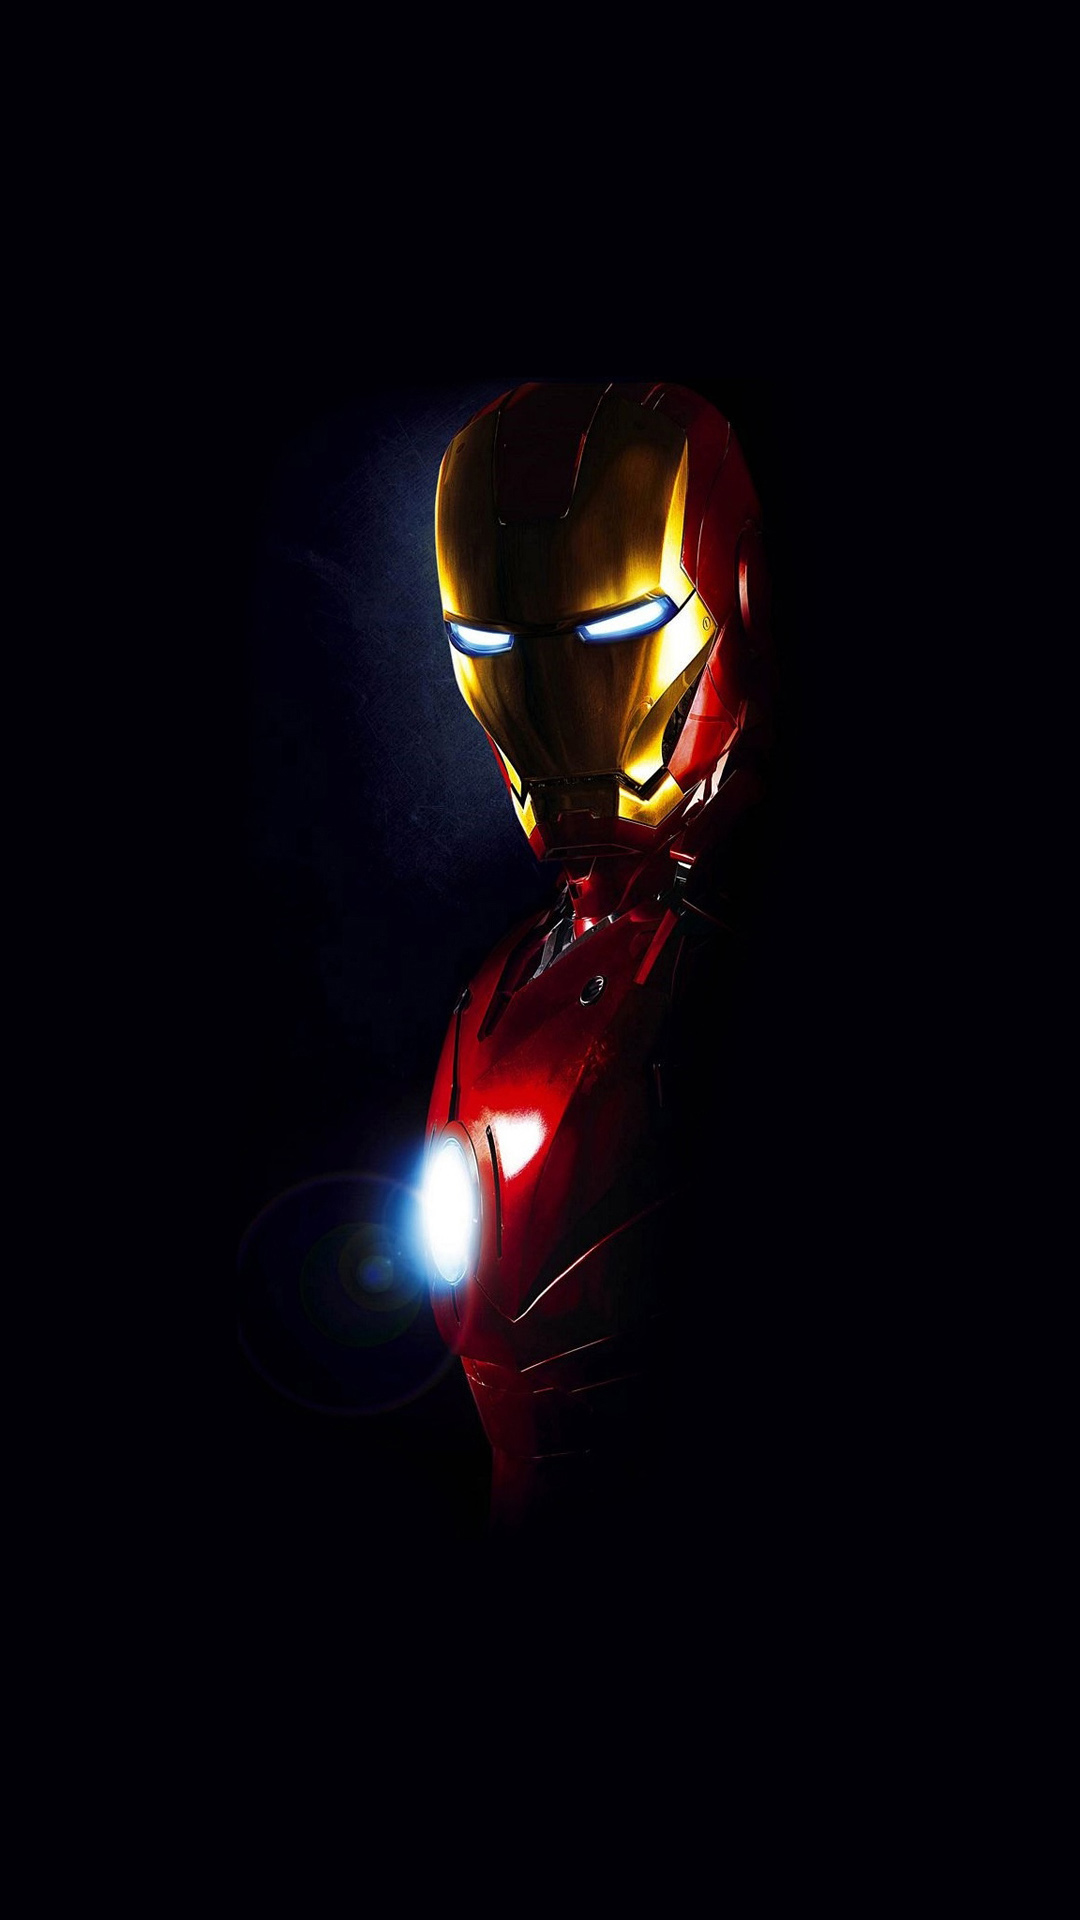 iron man wallpaper for android,light,red,darkness,lighting,helmet